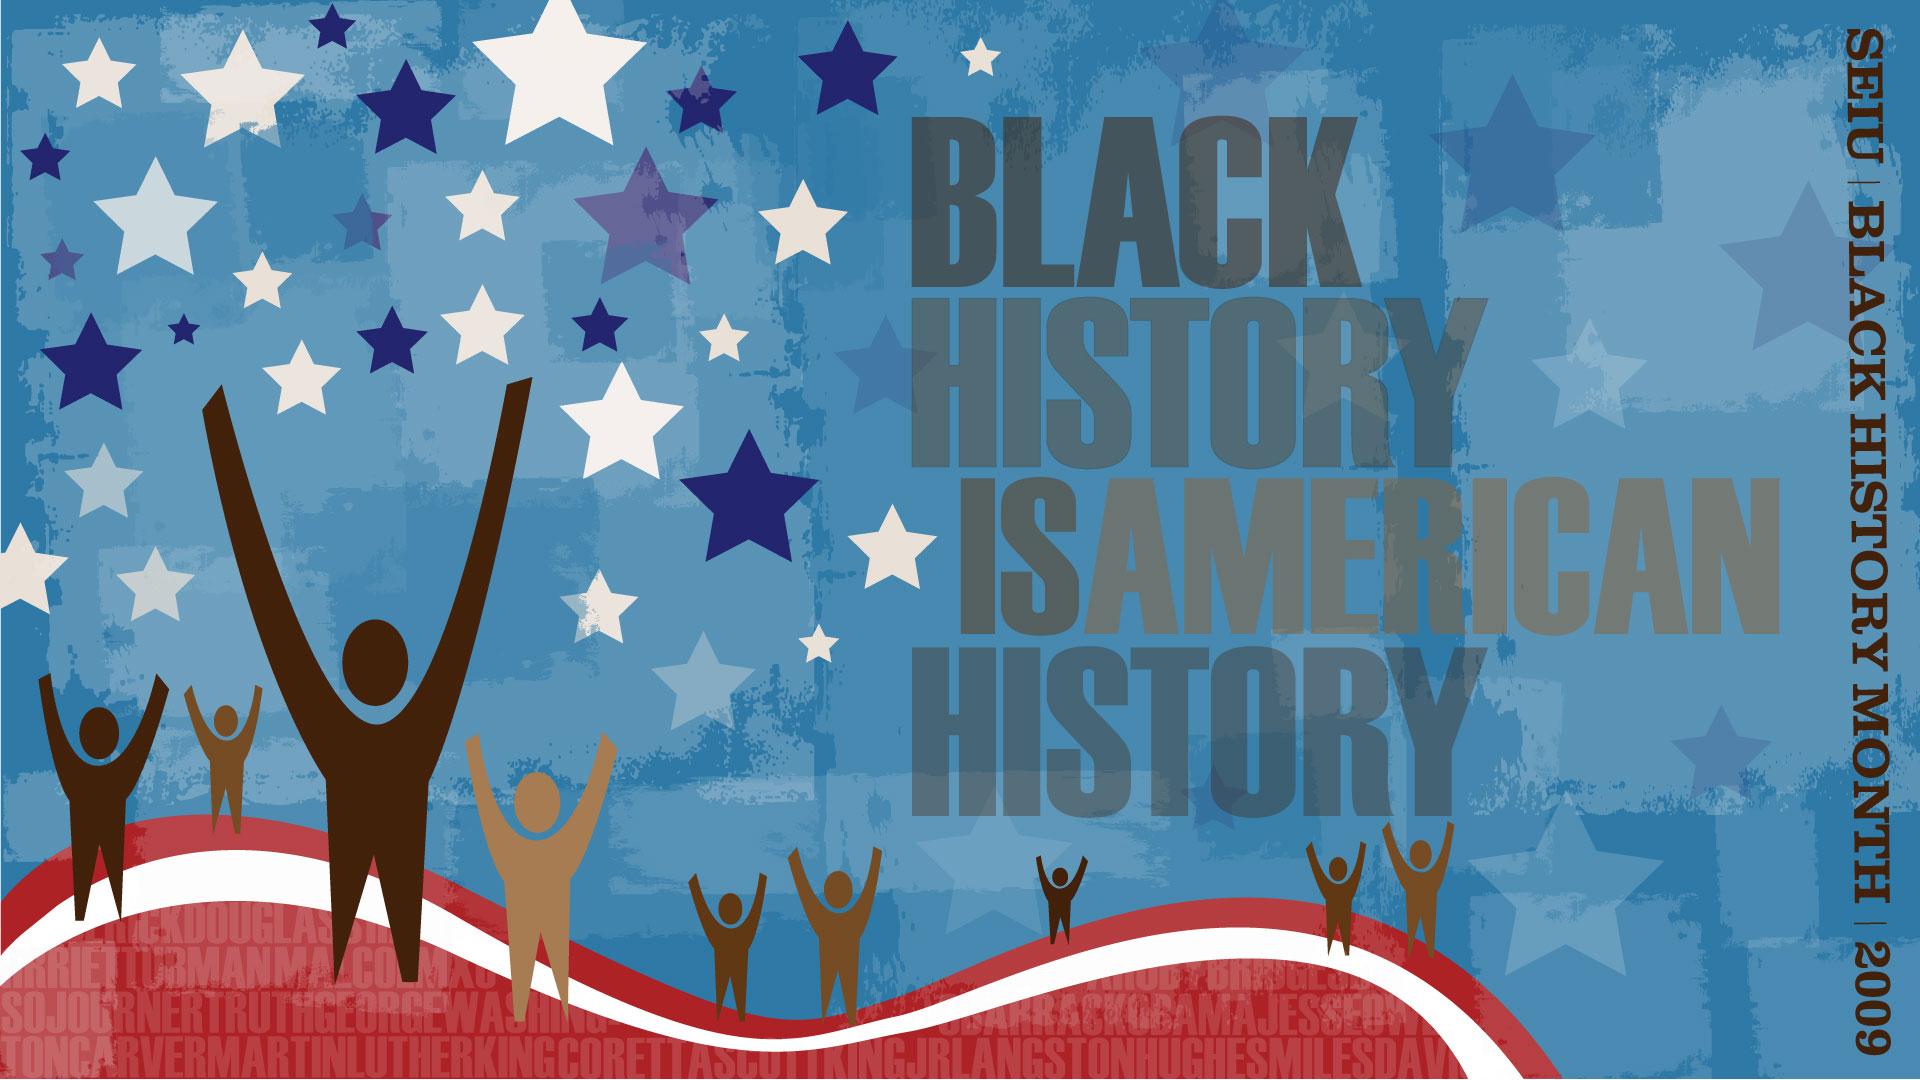 Black History Month wallpaper